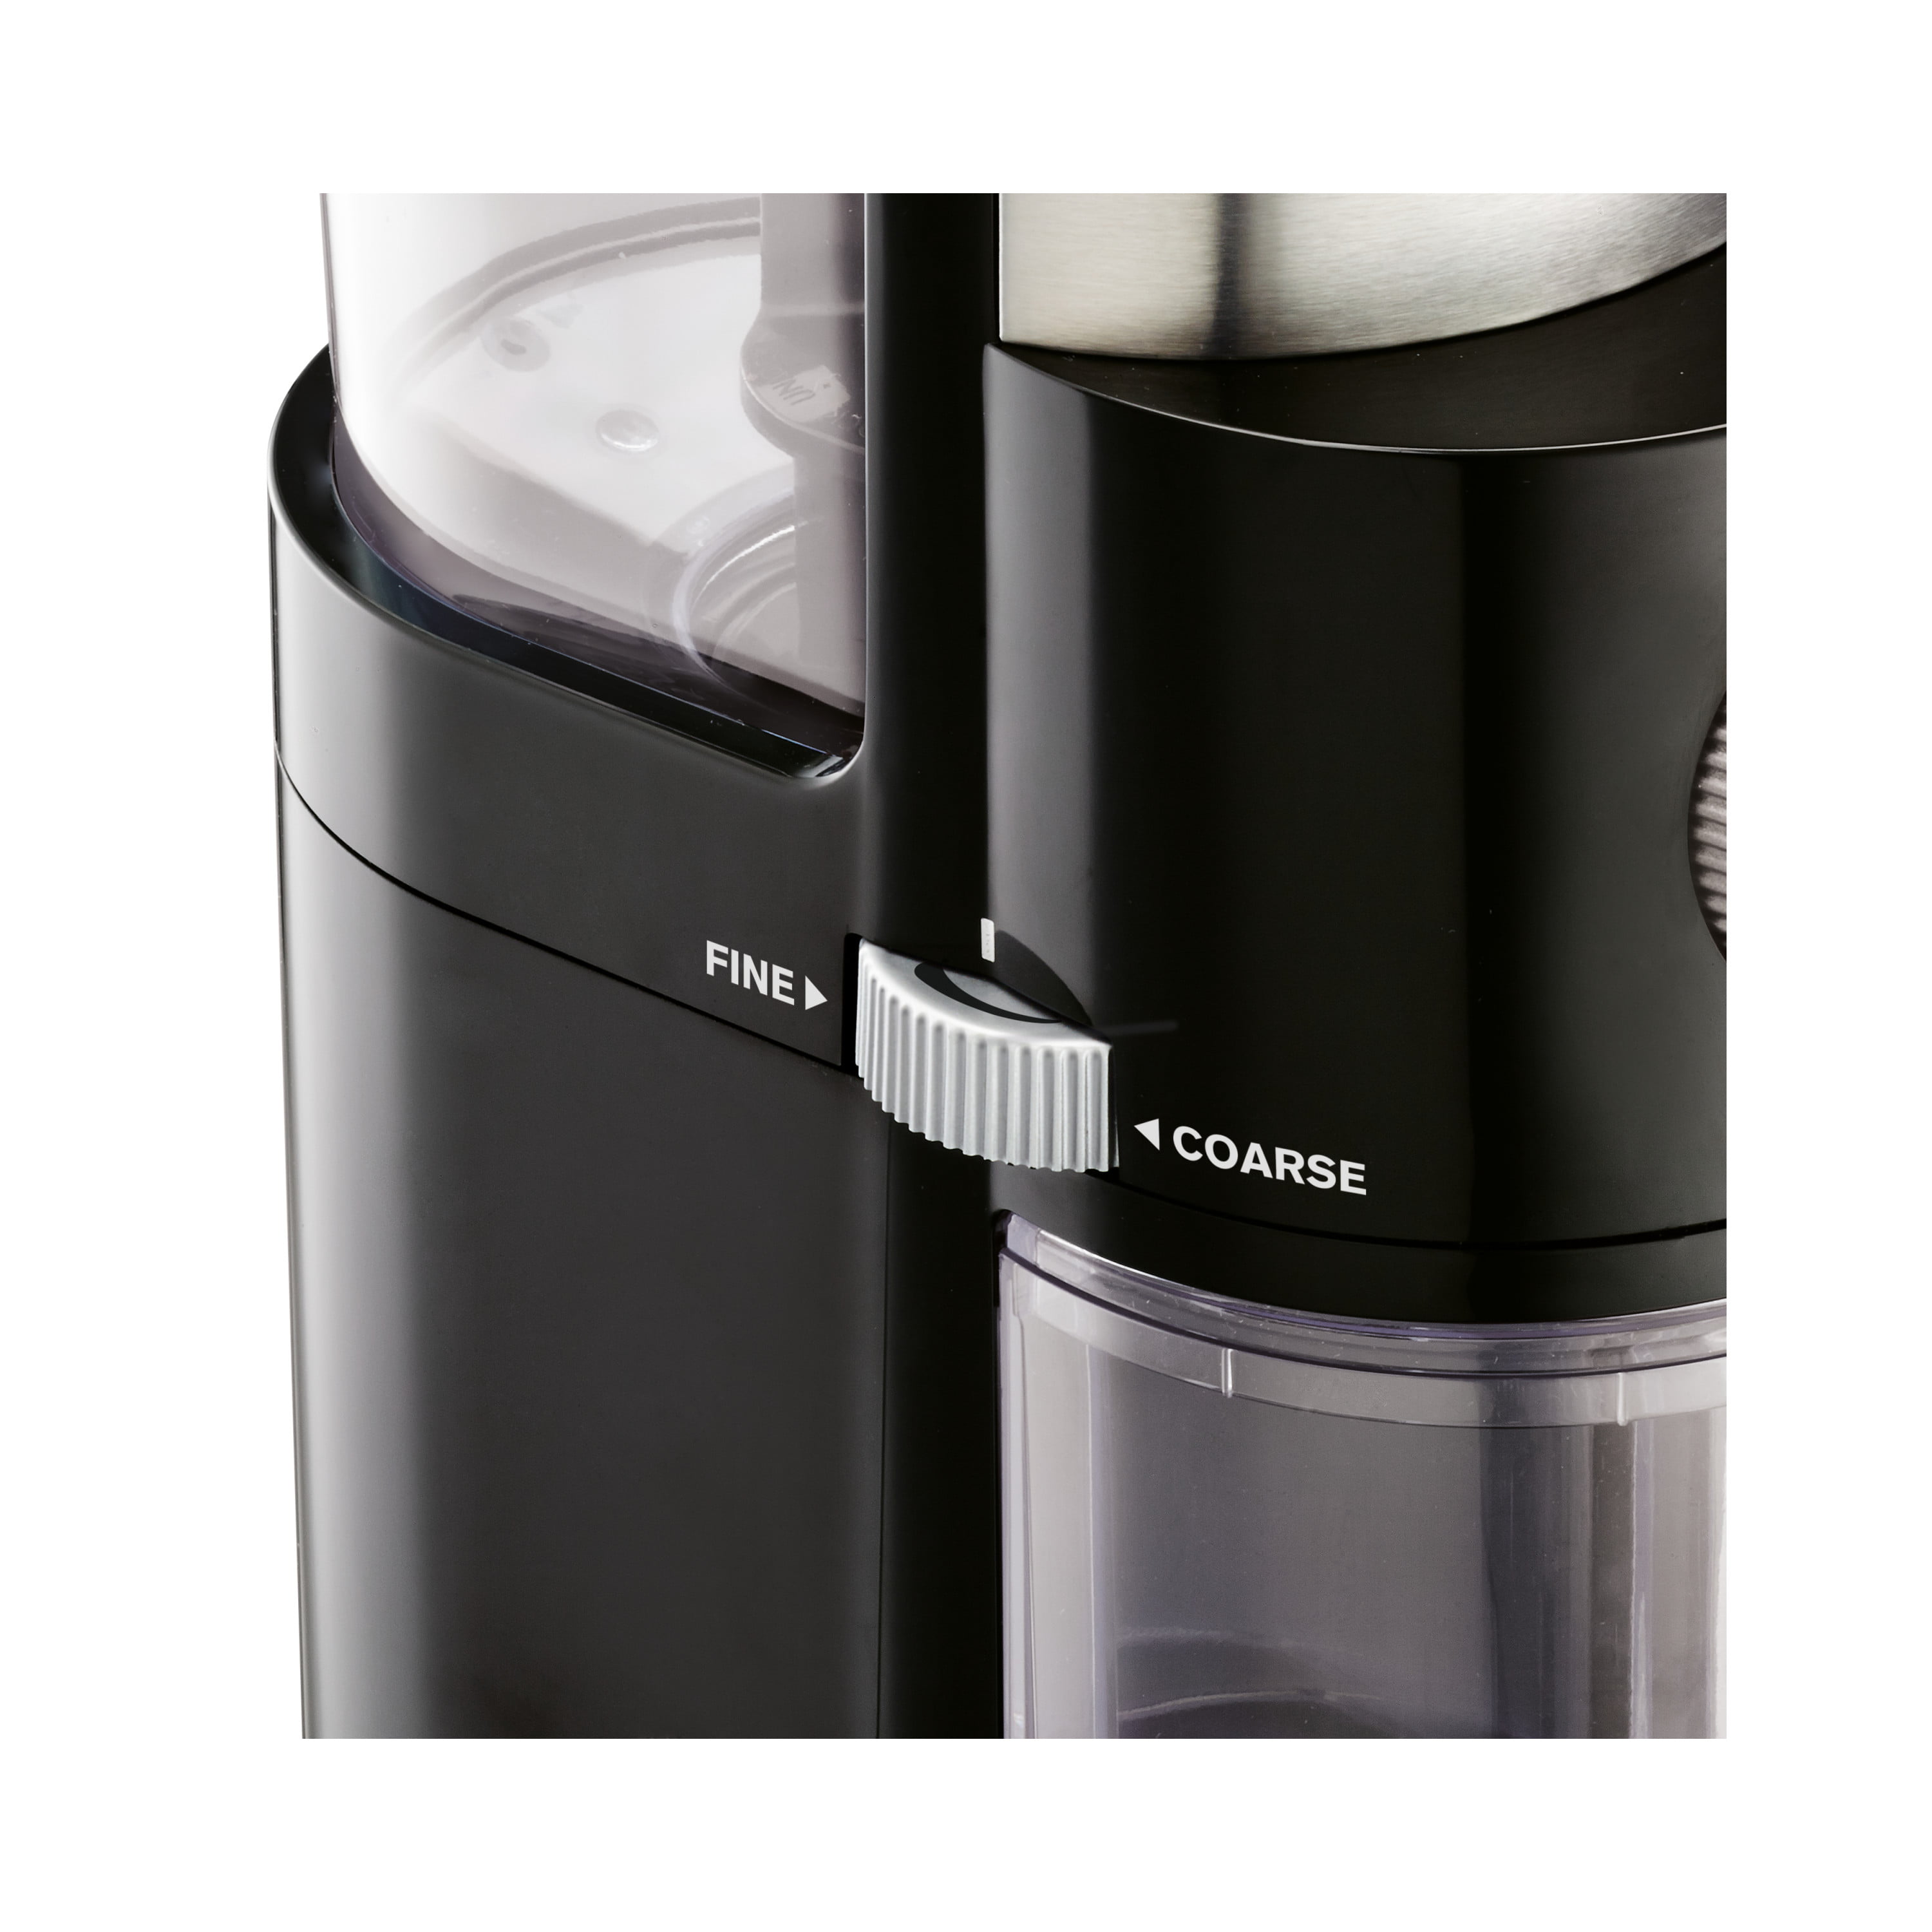 KRUPS GX500 Coffee Grinder Black Precision Flat Burr 12 Cup 12 Grind  Working 689745333590